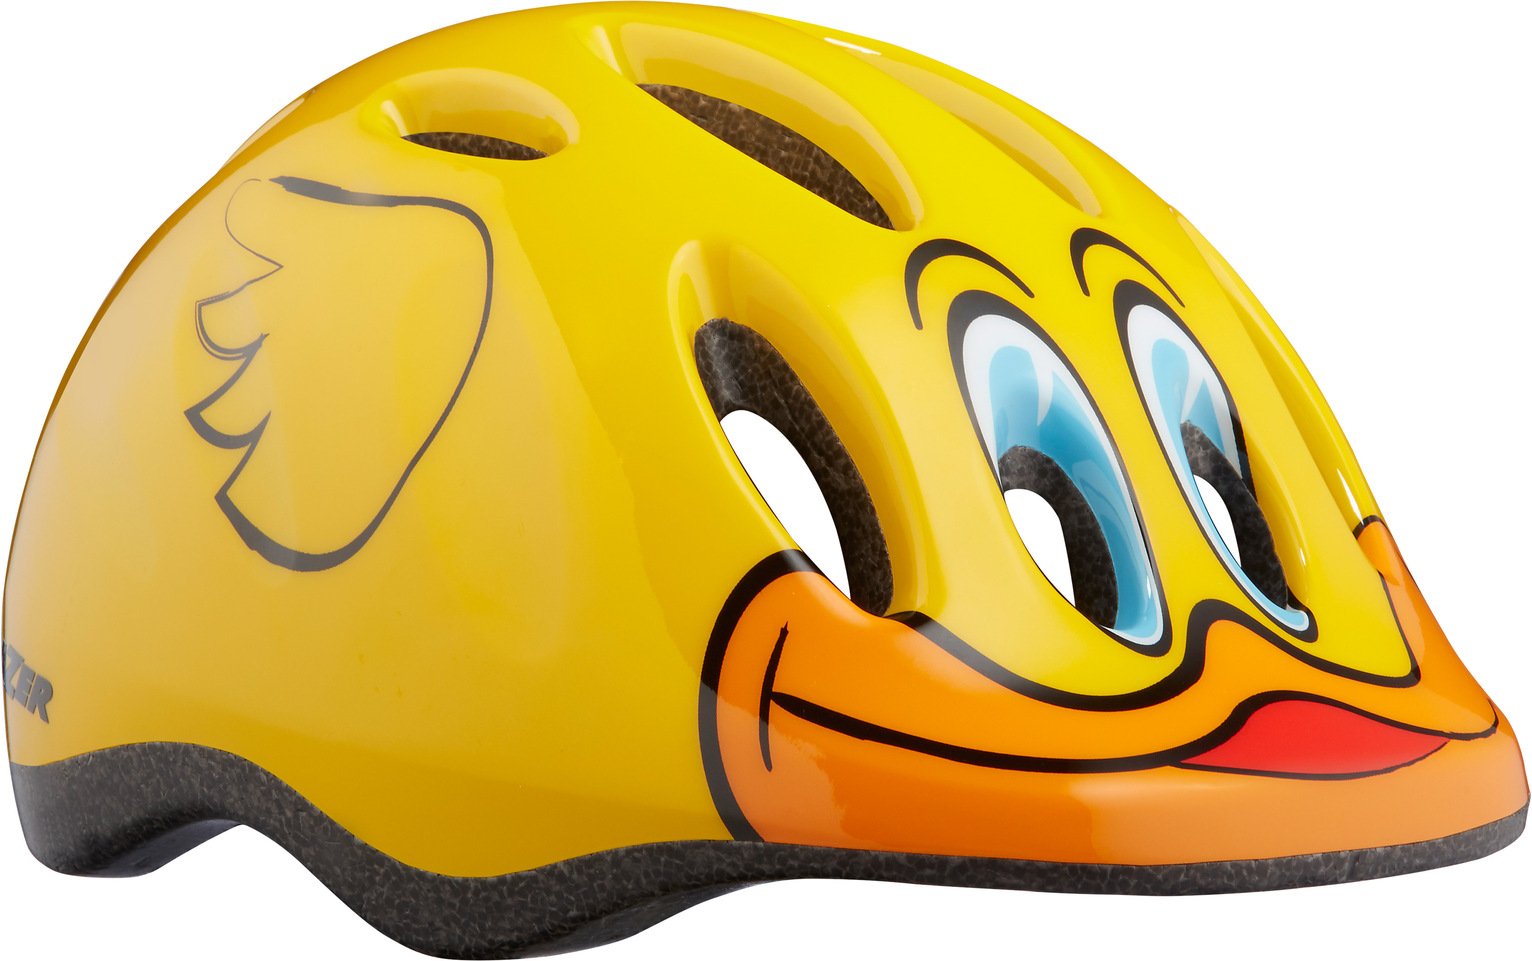 bicycle duck with helmet